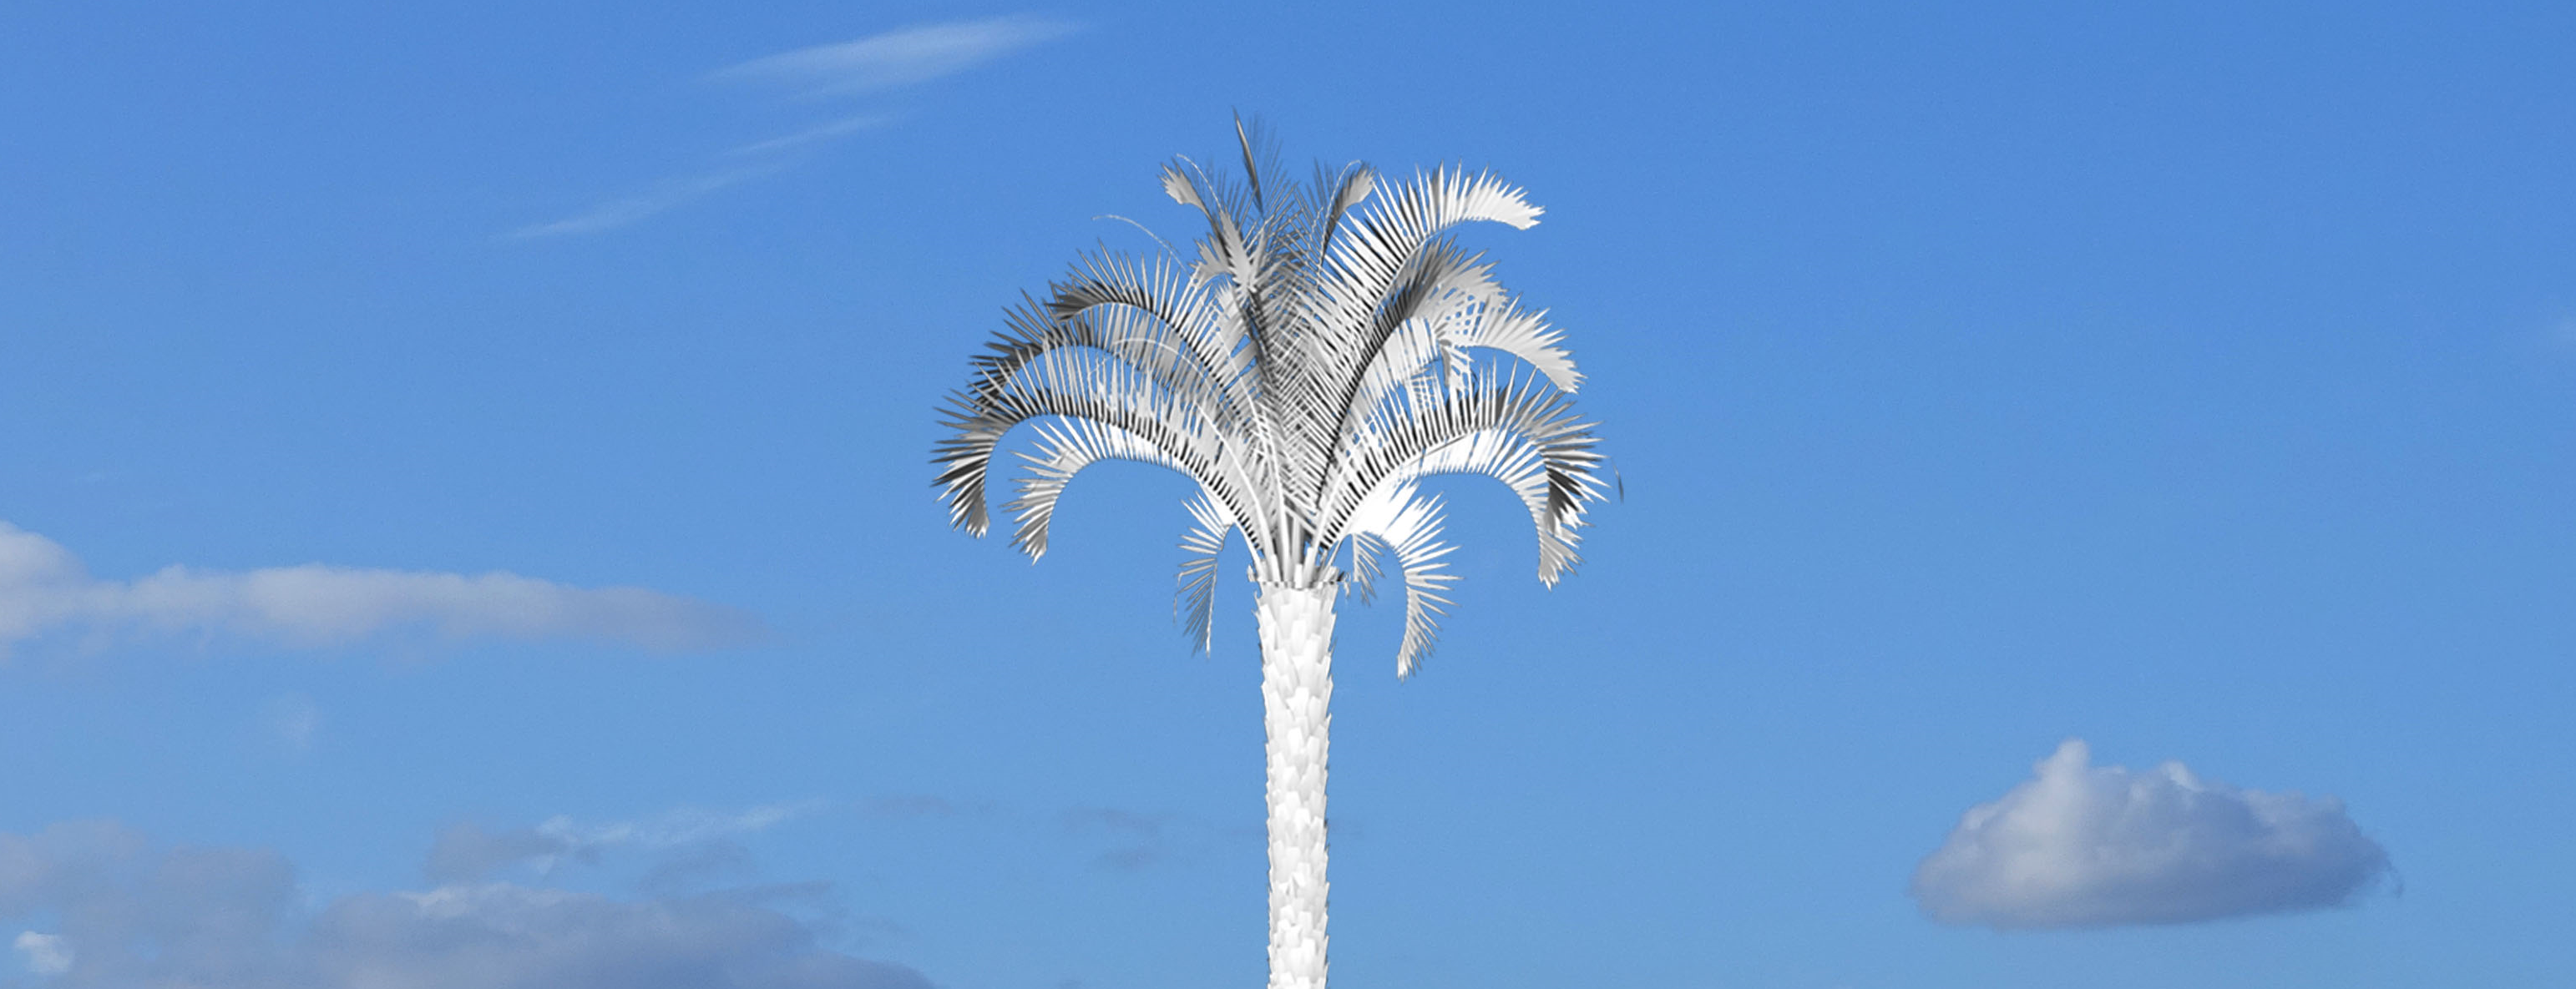 White Palm image